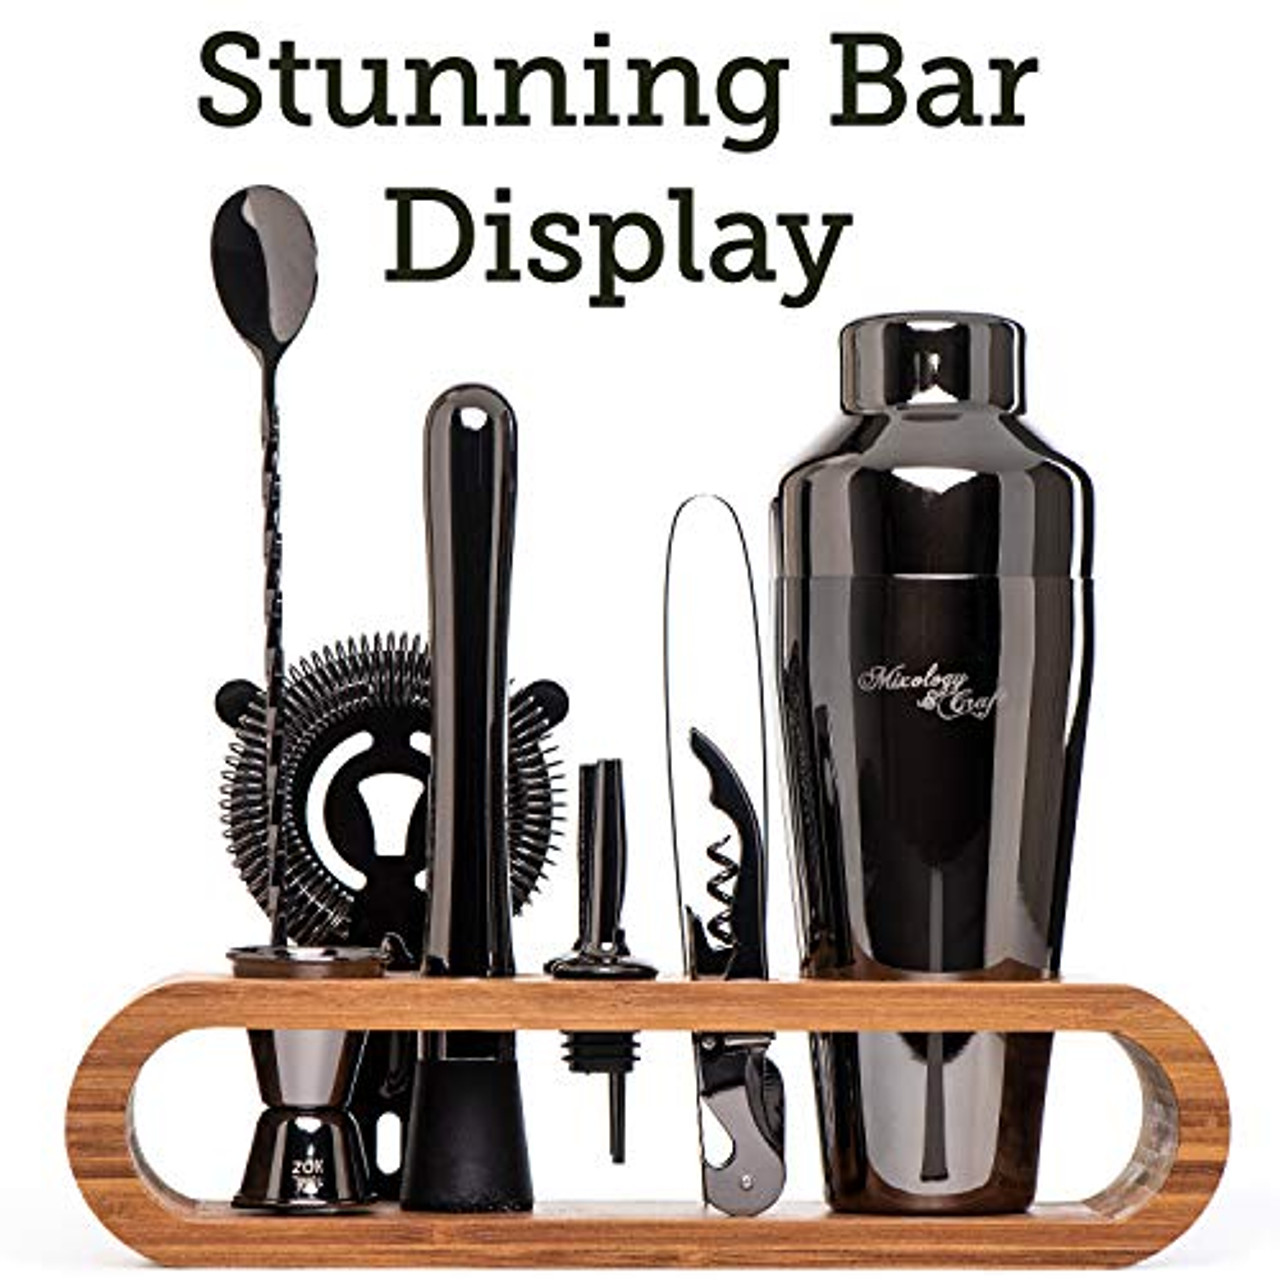 Bartender Kit: 10-Piece Bar Set Cocktail Shaker Set with Stylish